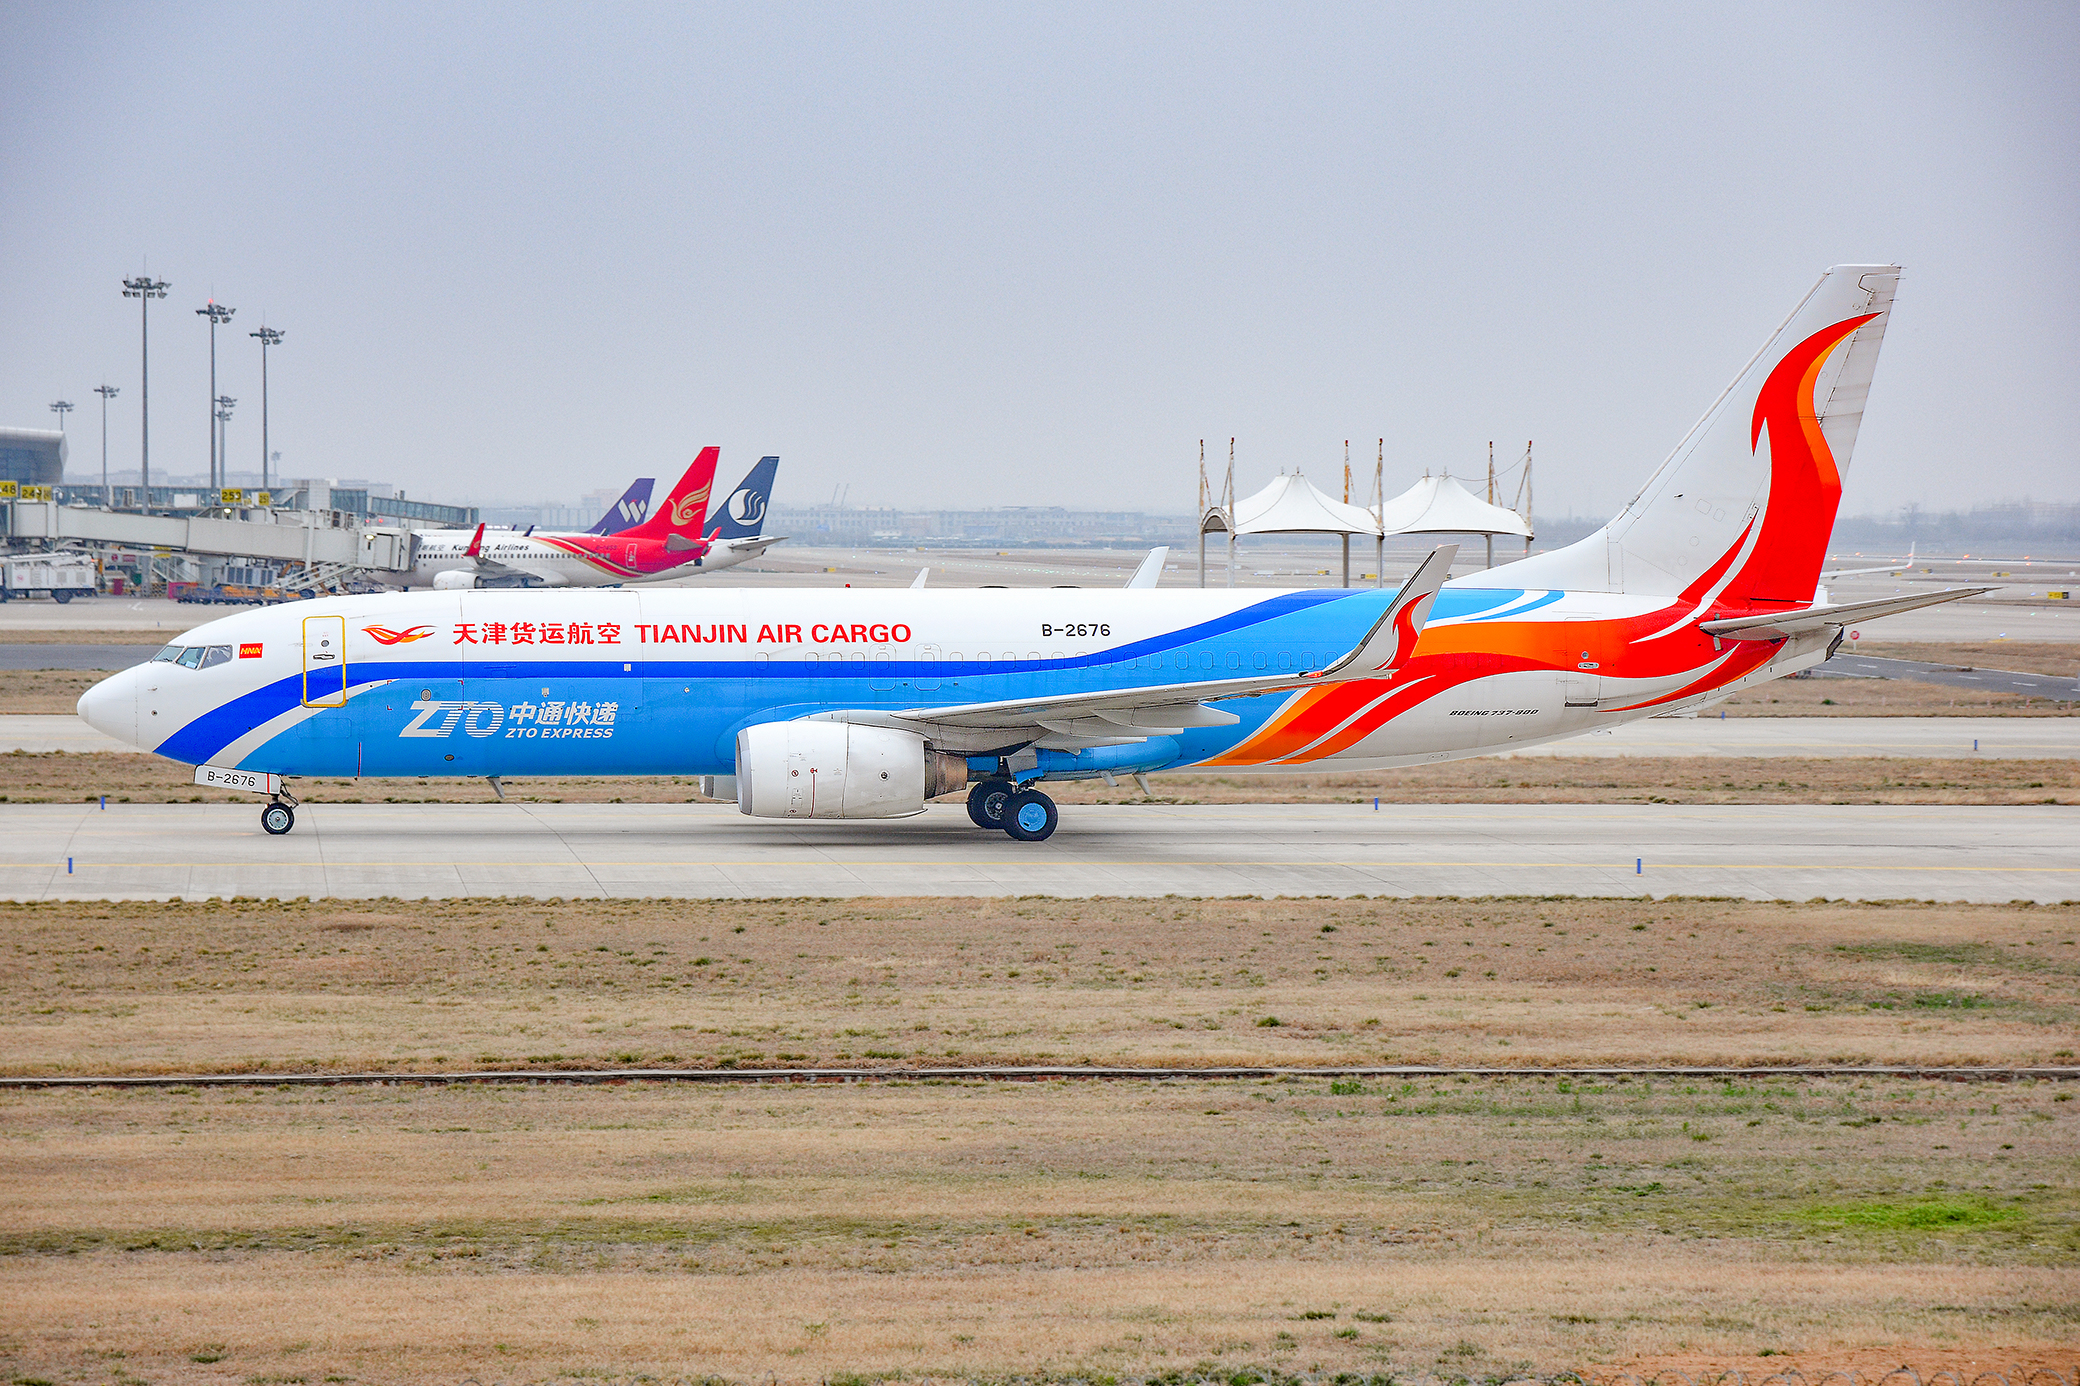 B-2676/B2676 Tianjin Air Cargo Boeing 737 NG Airframe Information - AVSpotters.com